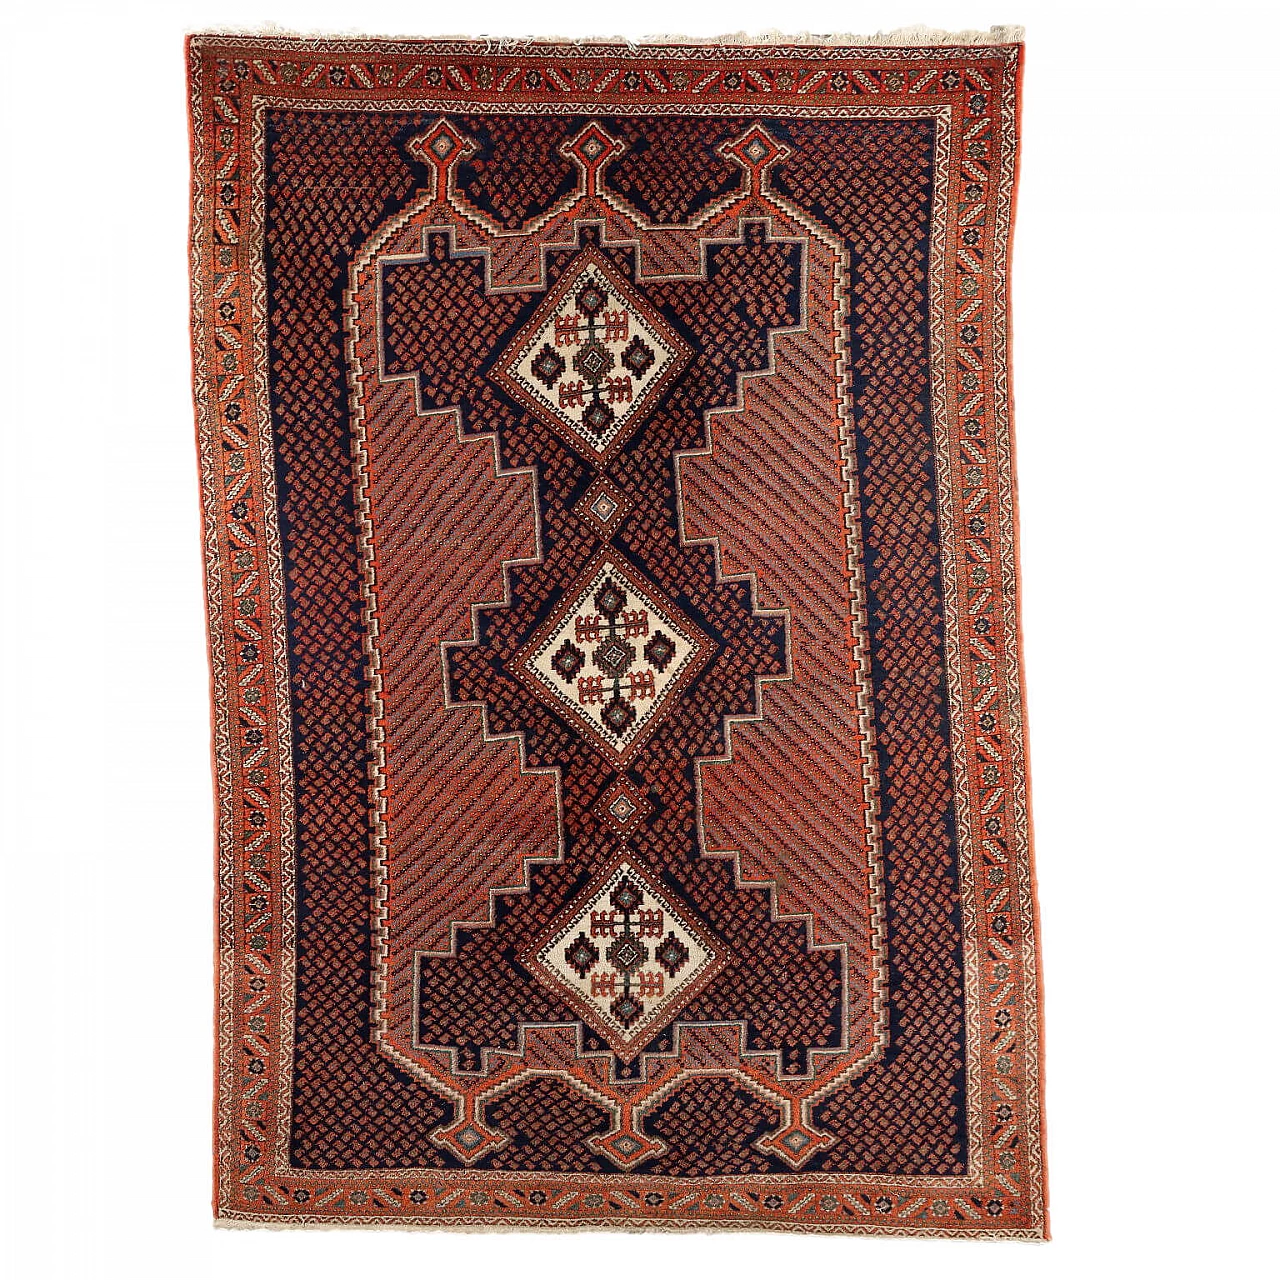 Afshar cotton and wool Iranian carpet 1